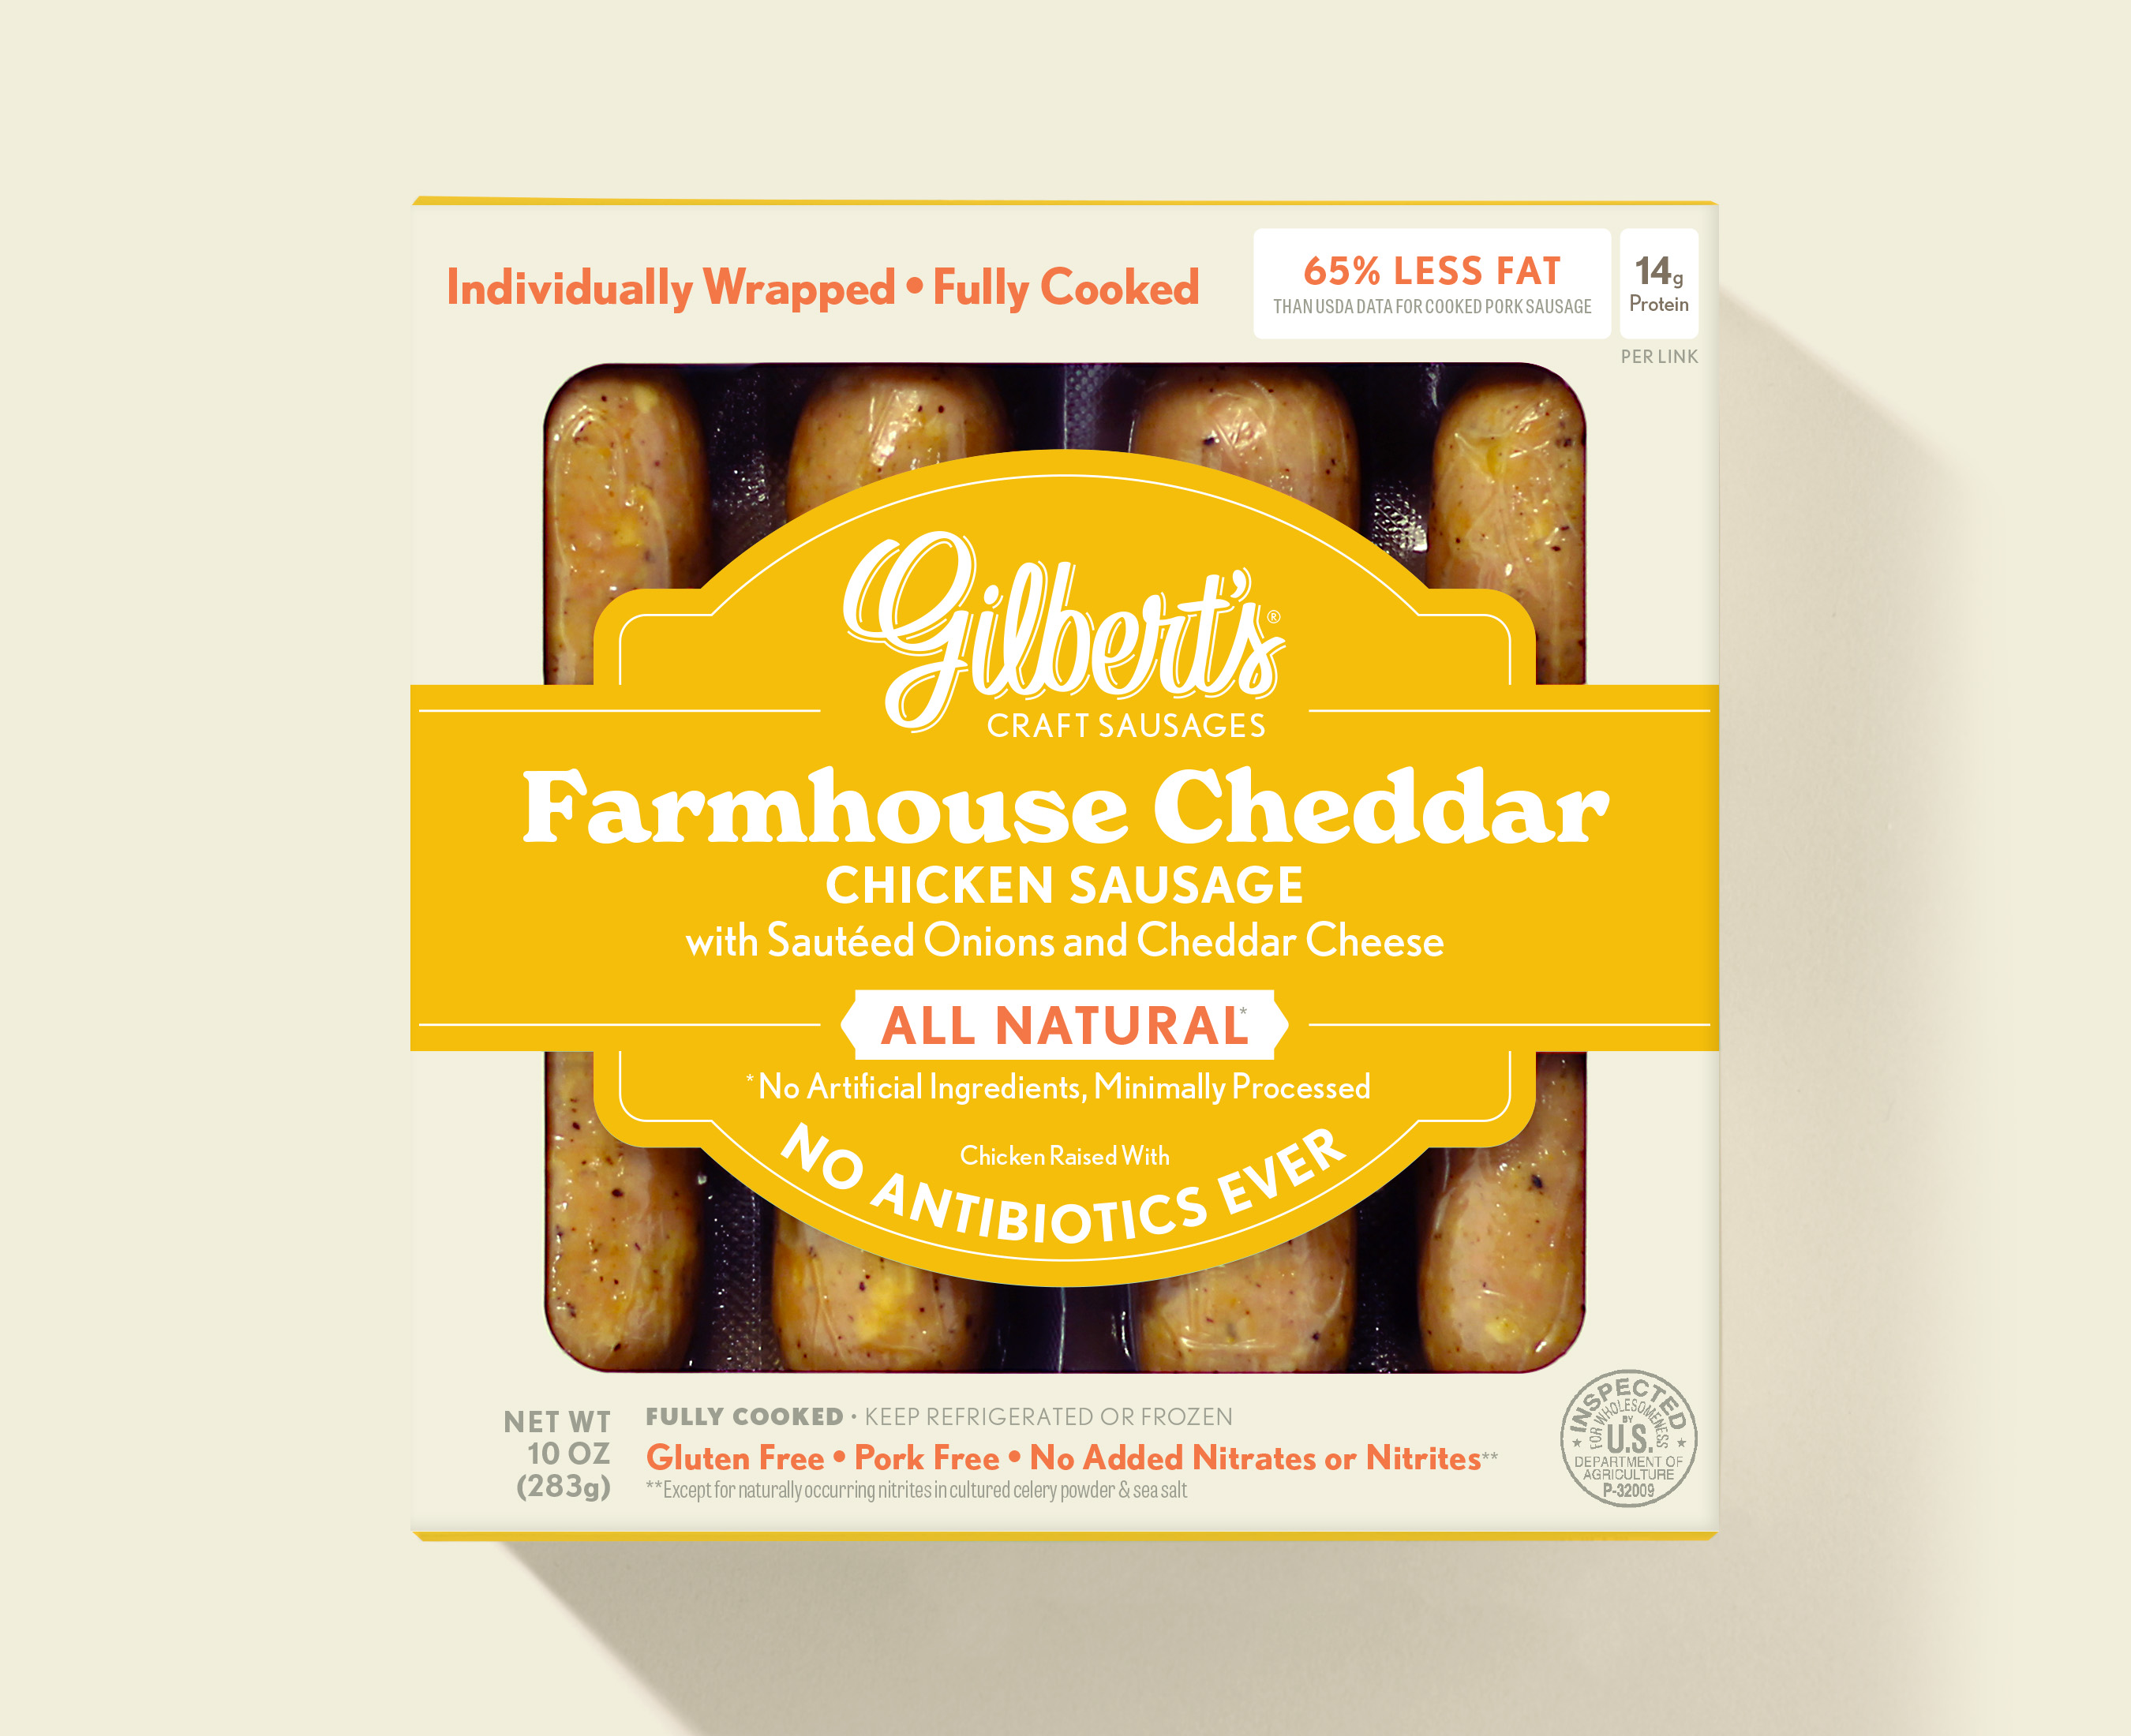 Gilbert's Farmhouse Cheddar Chicken Sausage